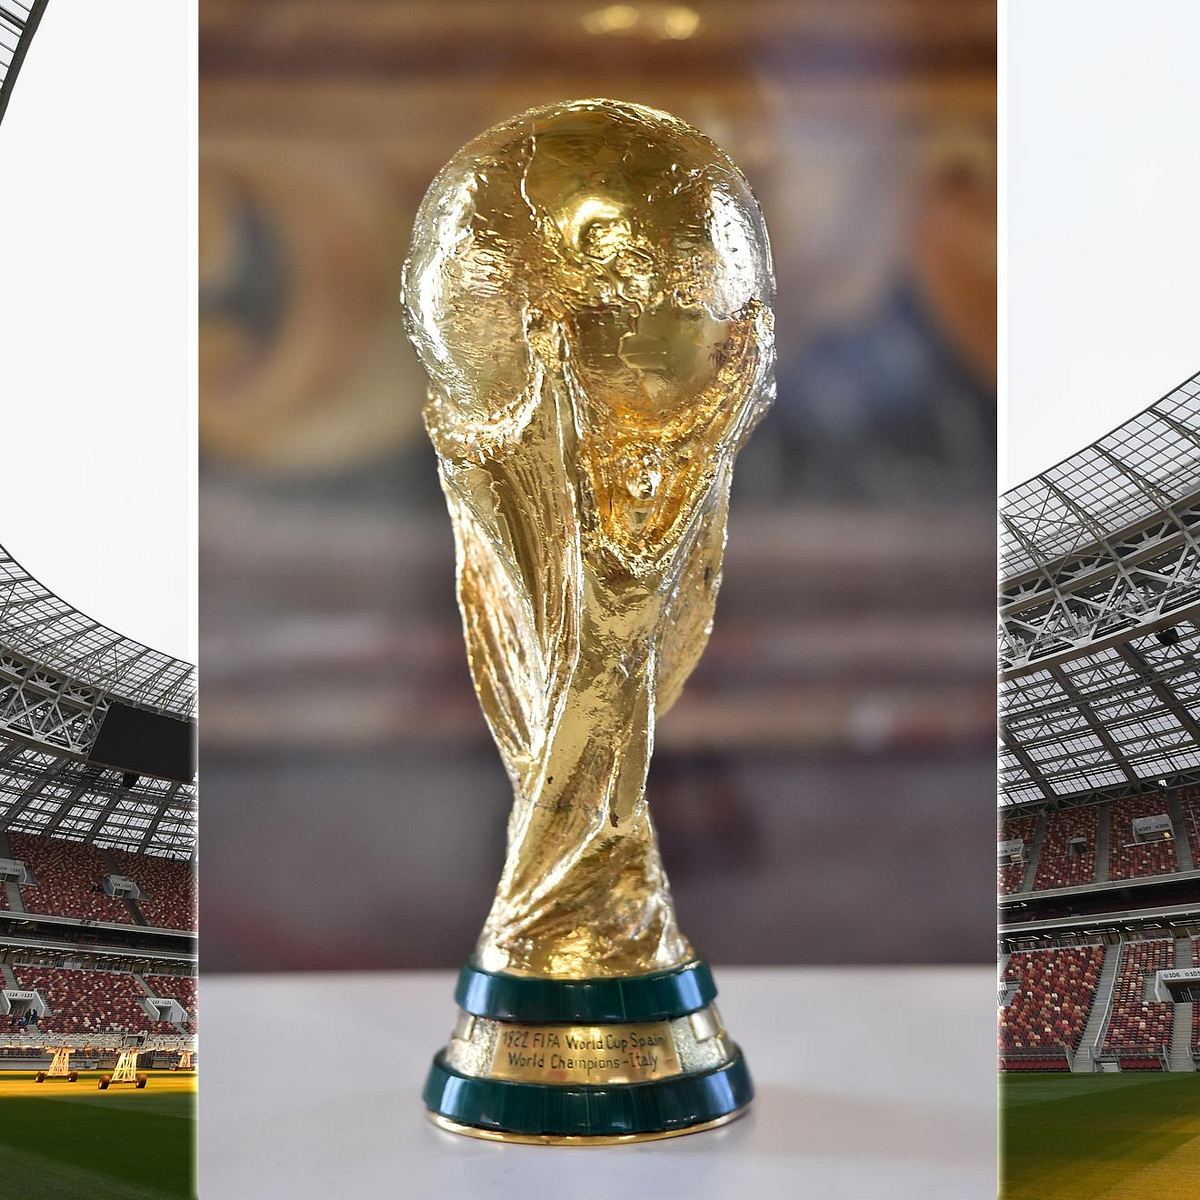 32 Mannschaften wollen den WM-Pokal gewinnen.